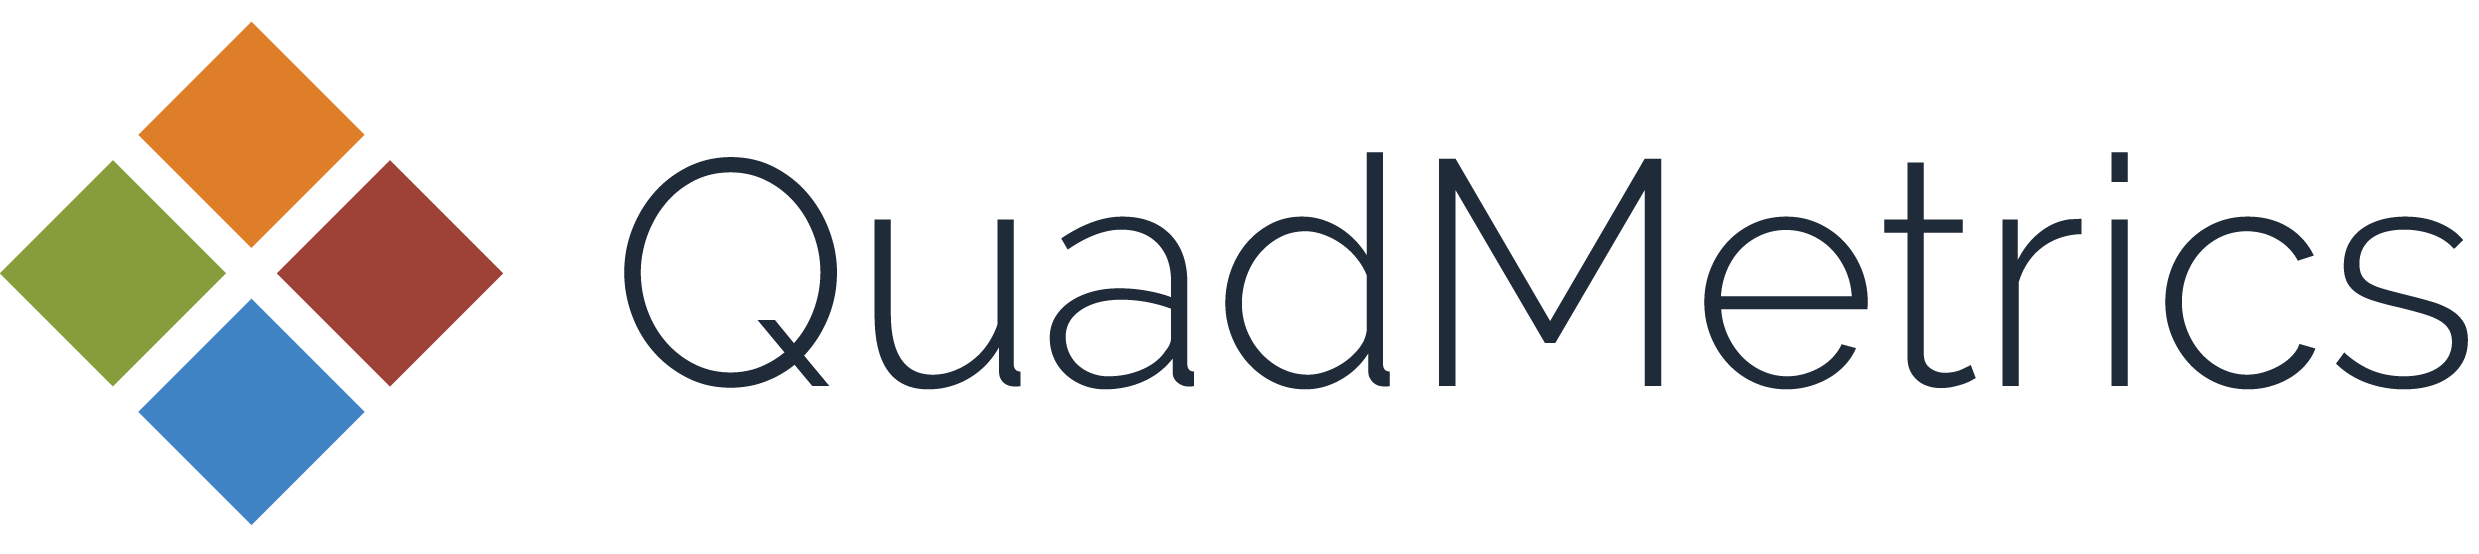 QuadMetrics logo